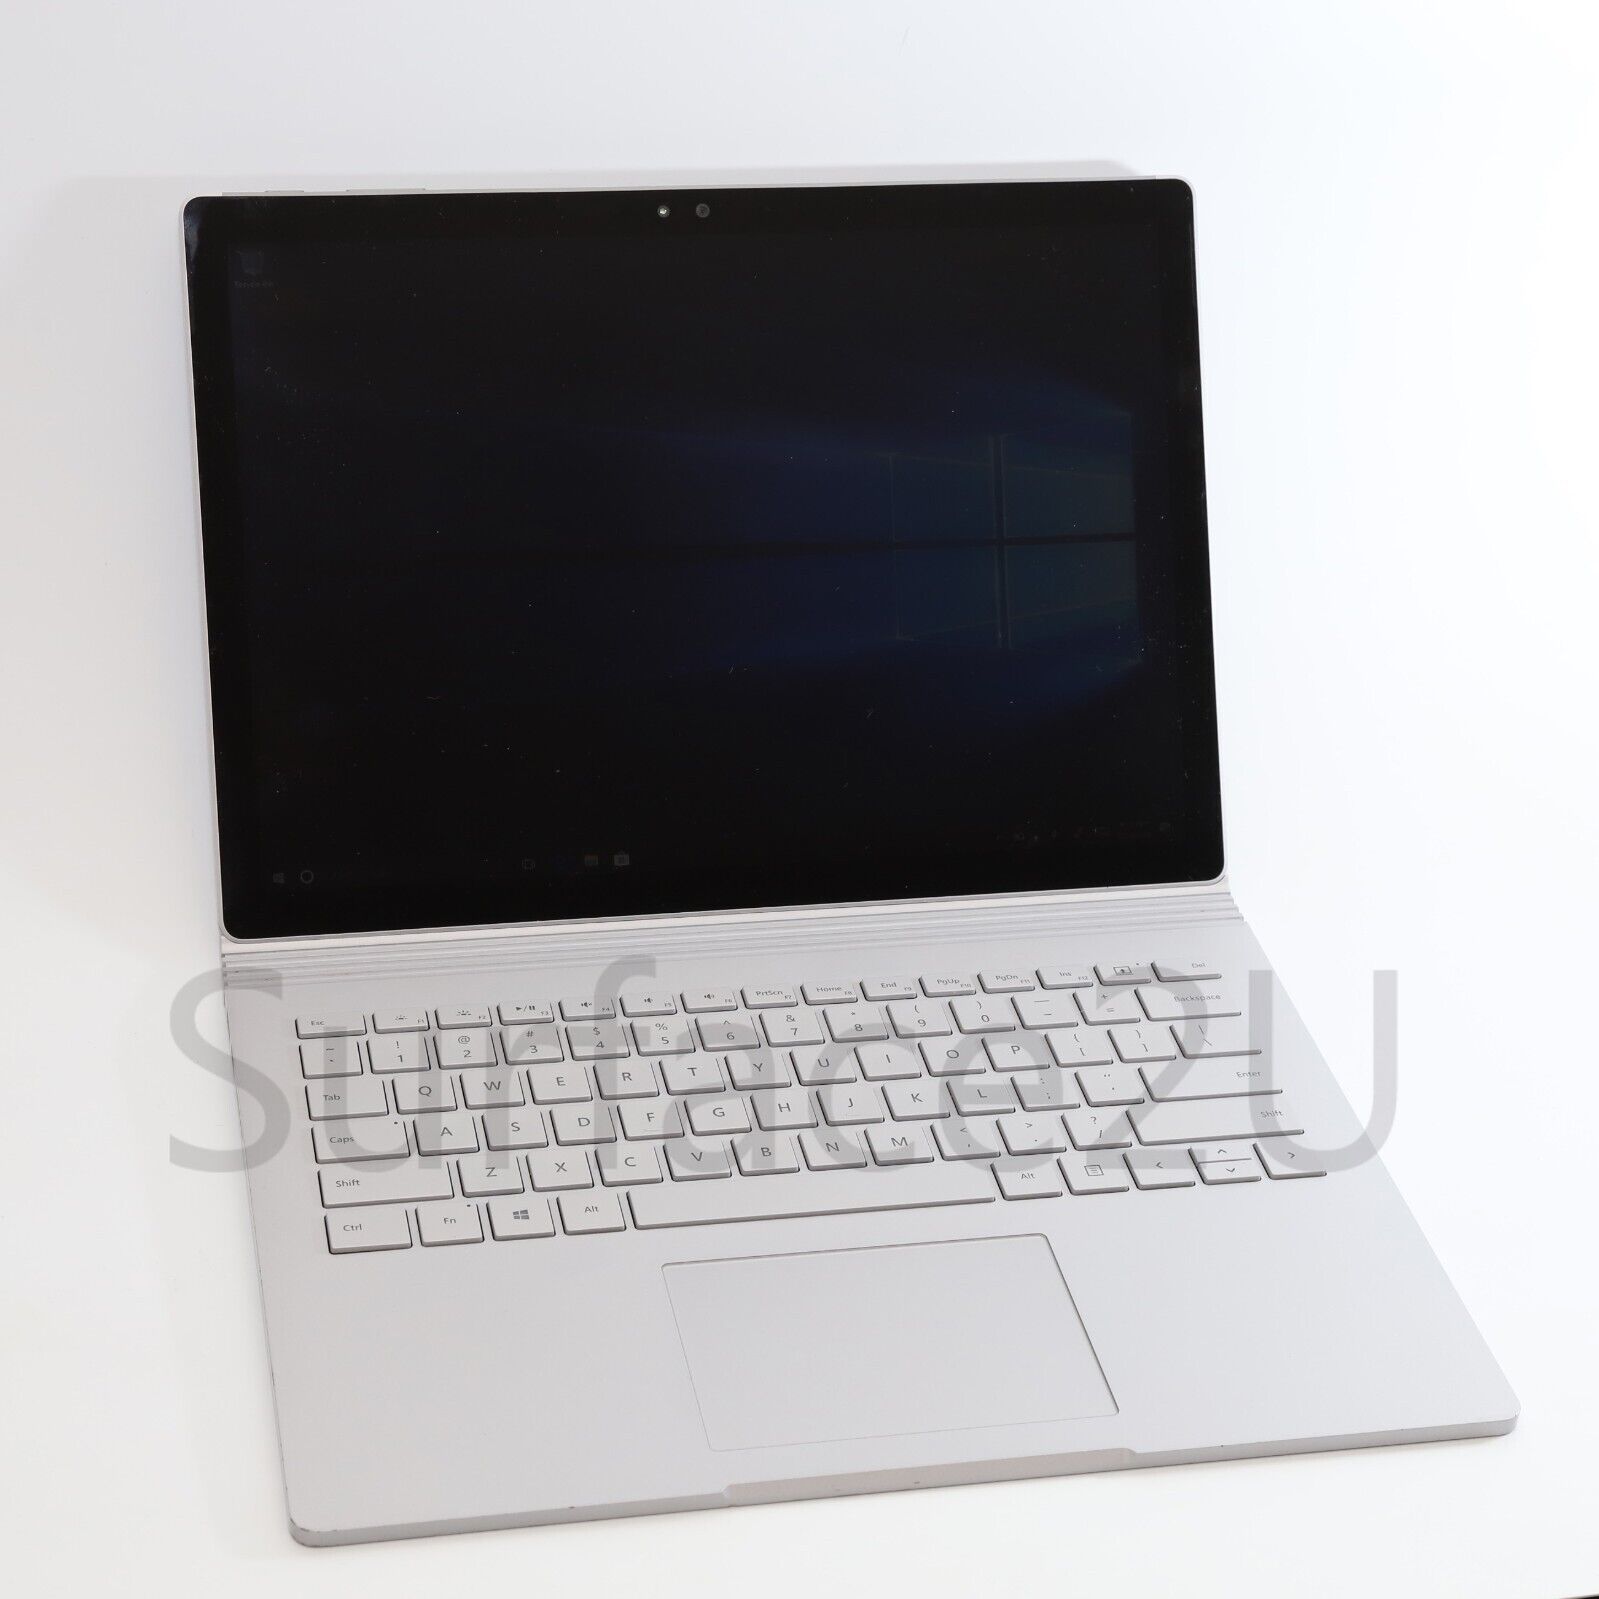 BUNDLE Microsoft Surface Book 2 256GB i5 8GB Win 10 Pro, Keyboard Base & Charger